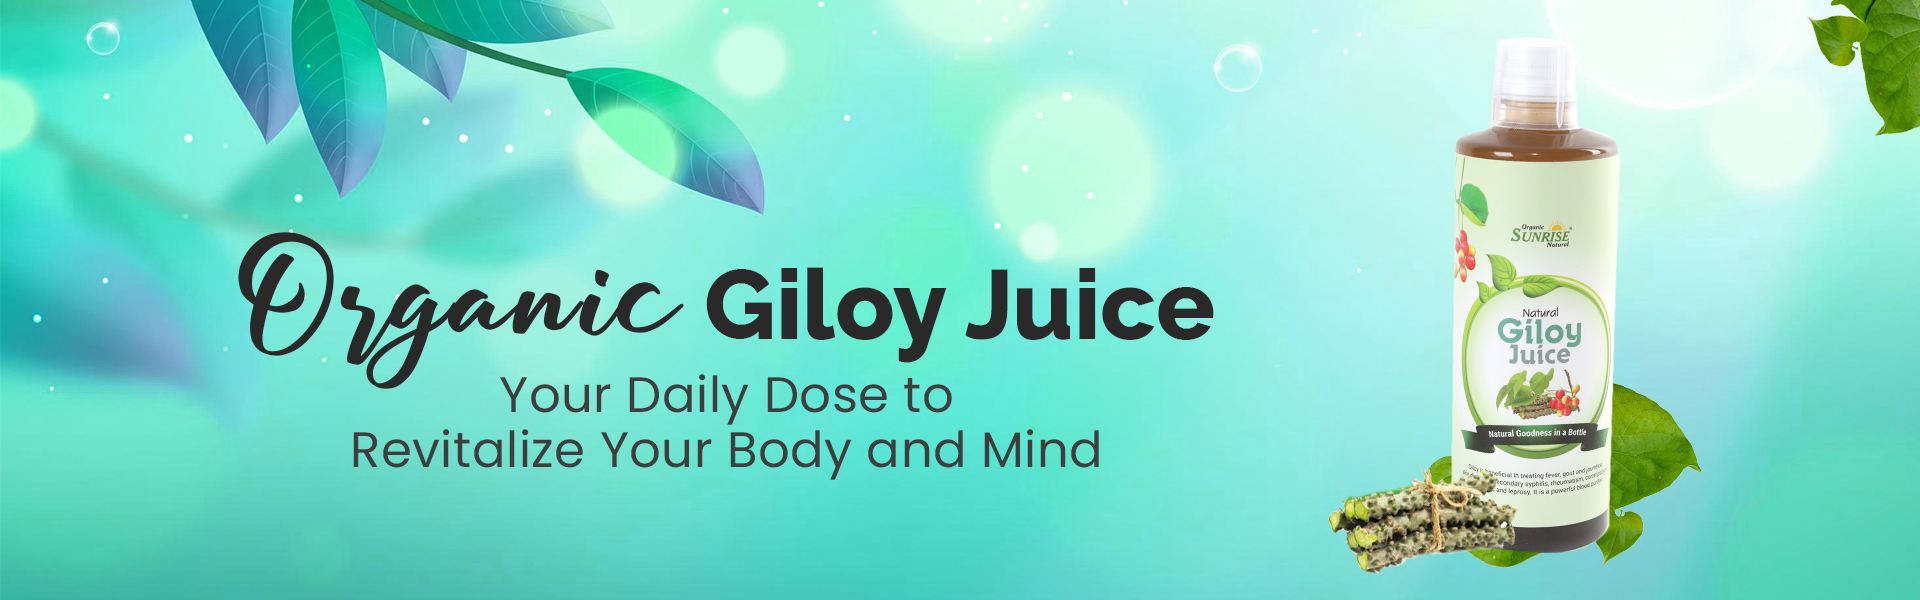 Sunrise Organic Giloy Juice